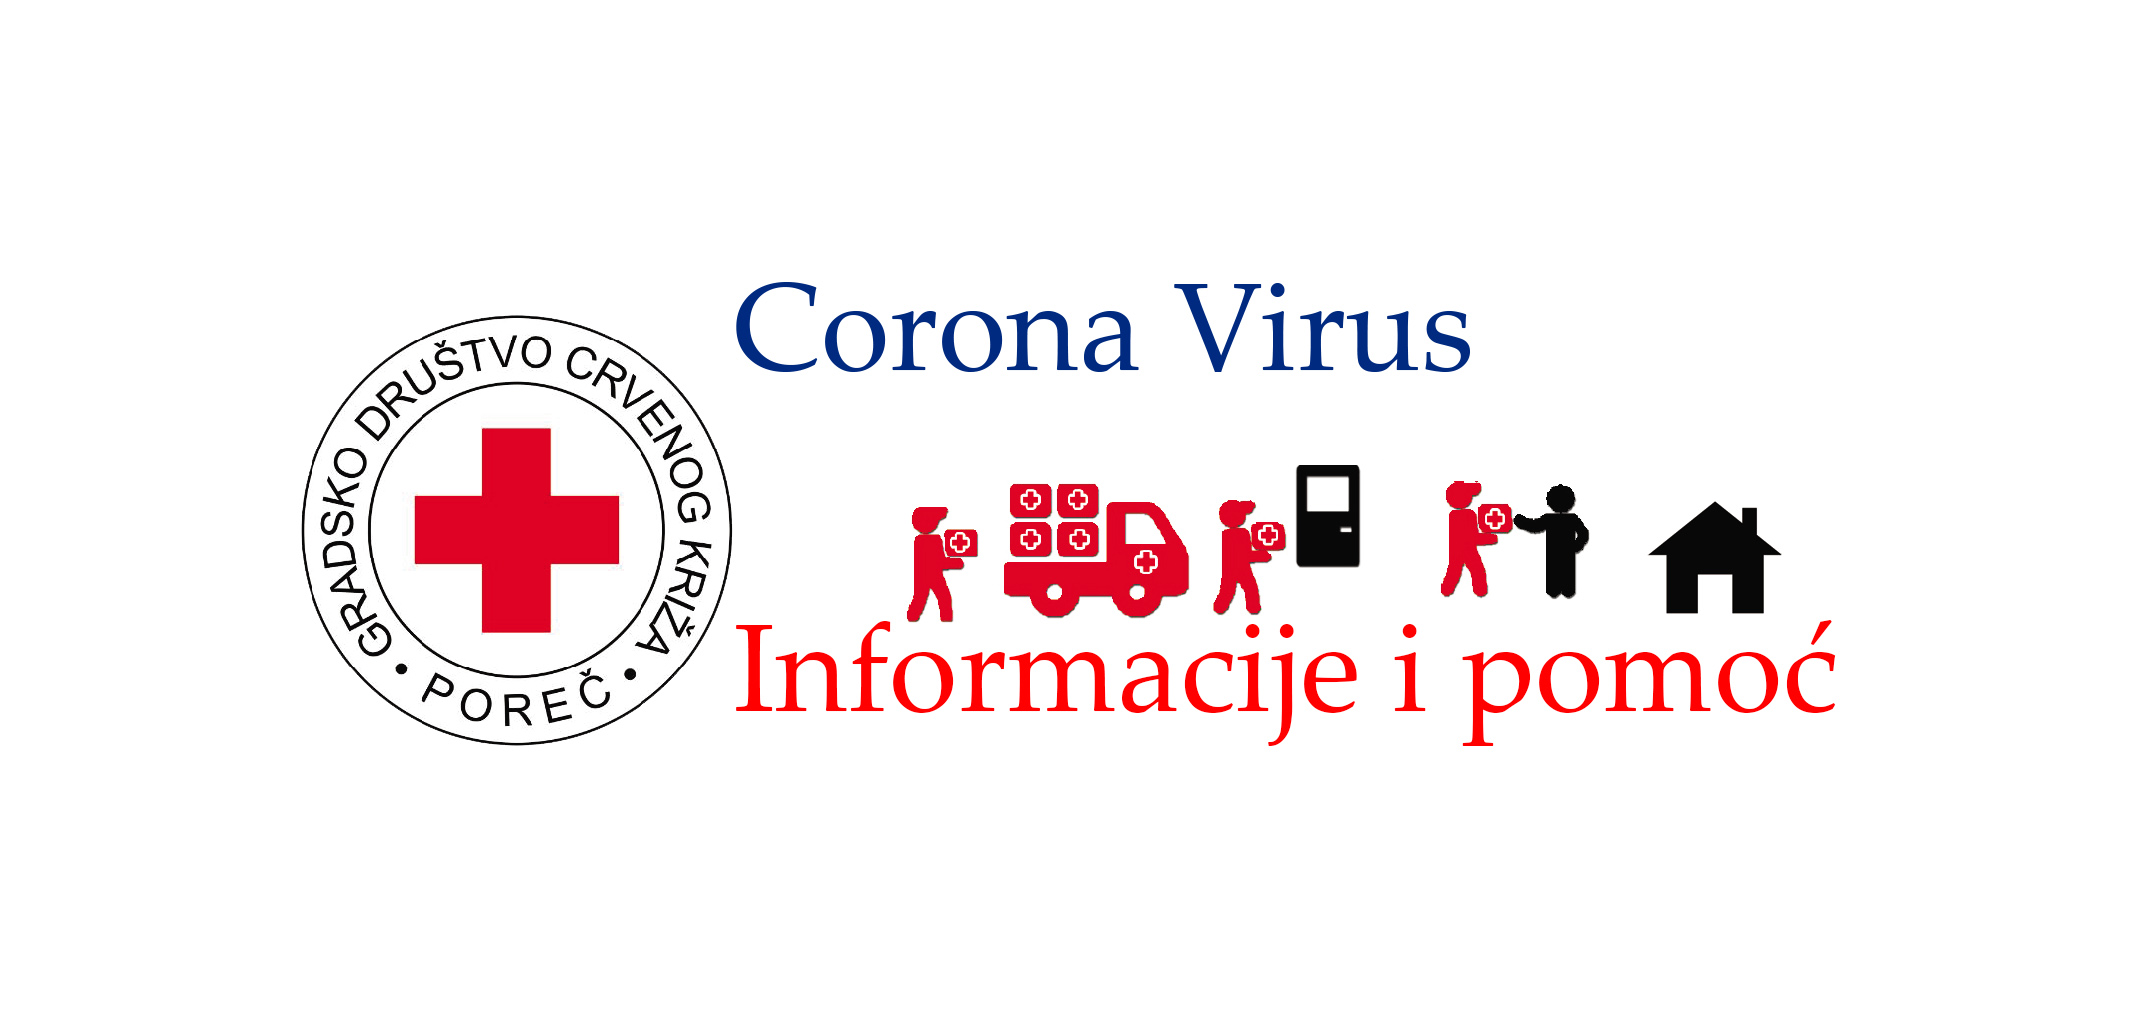 Informacije i pomoć vezano za Corona virus